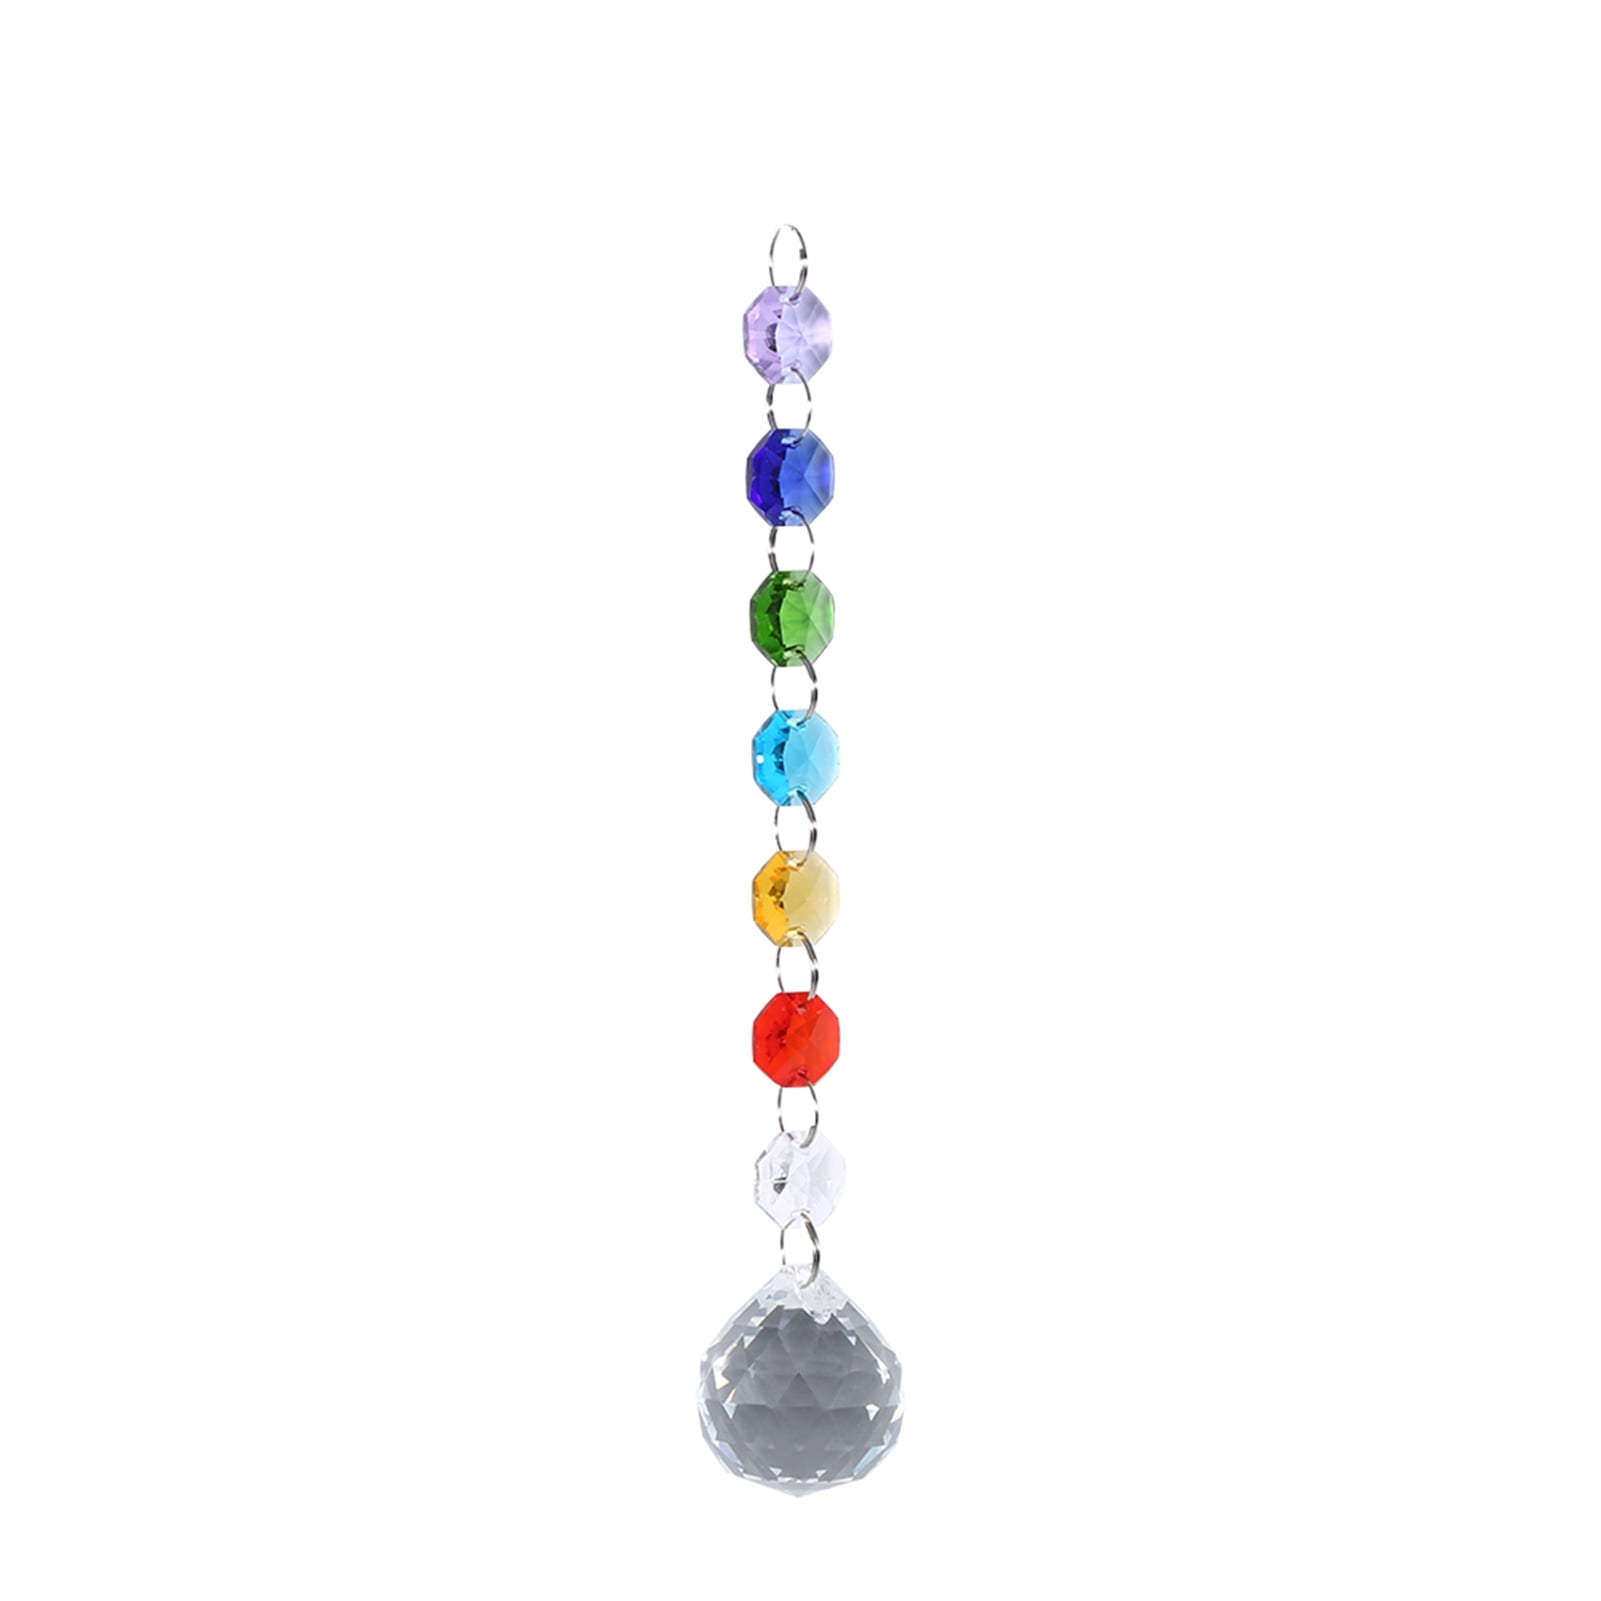 Rainbow Crystal Suncatcher Chandelier Lamp Prism Hanging Pendant Home Decor HOT 